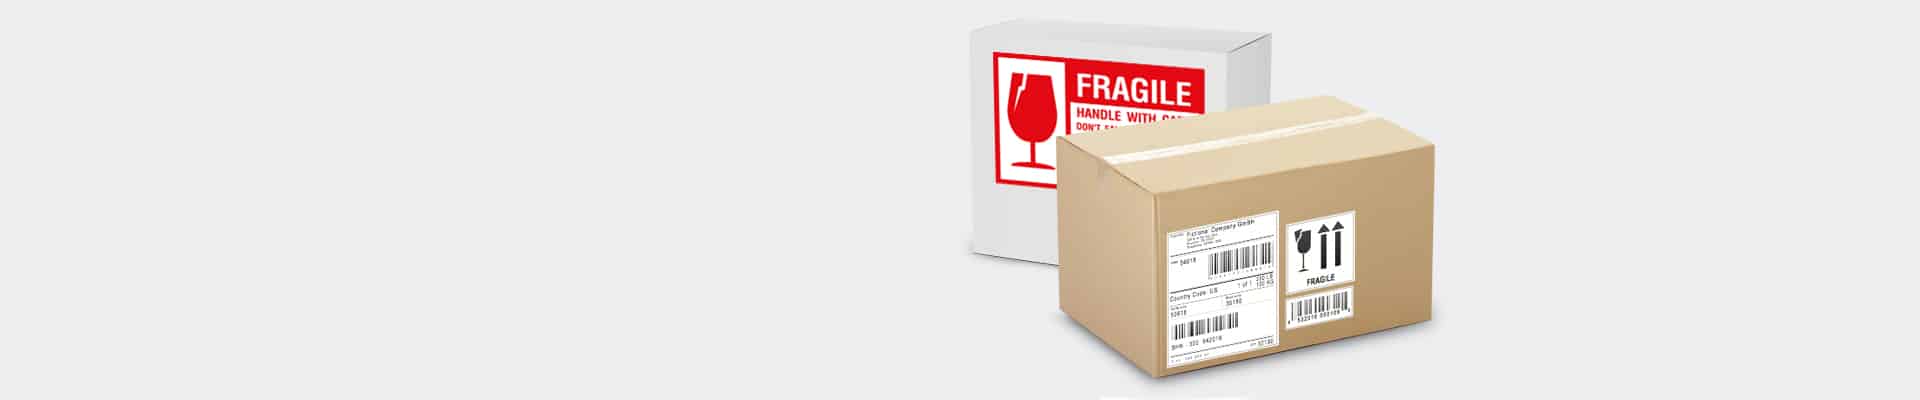 Crown Labels Case Studies Packingboxes